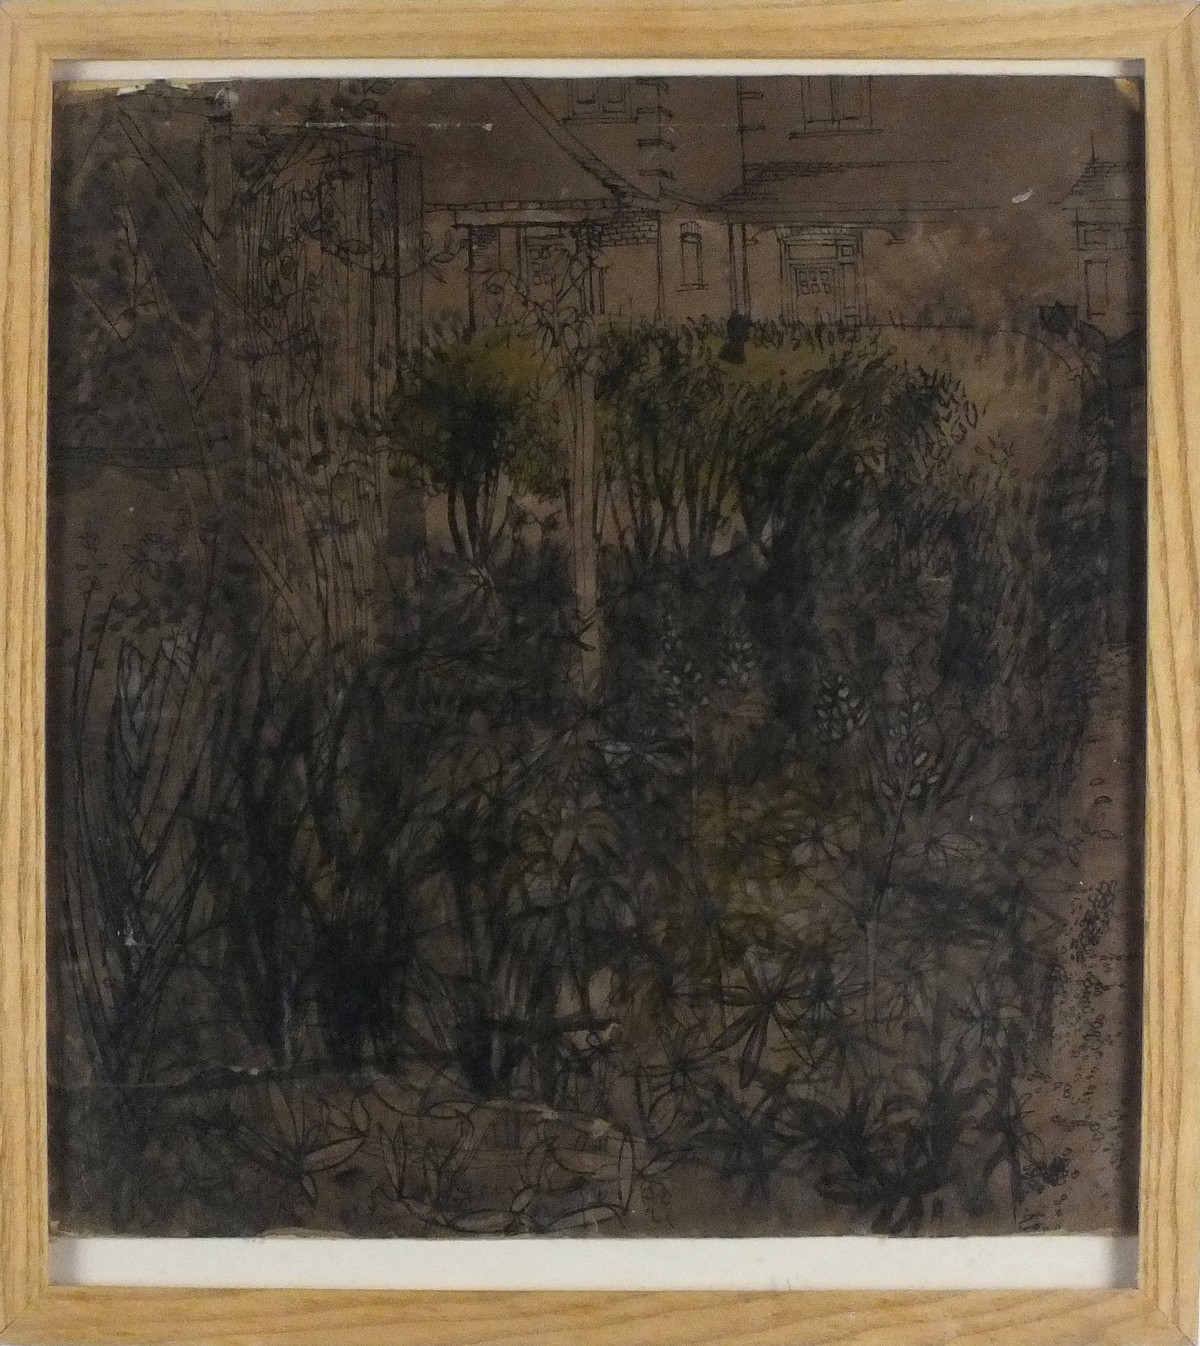 Pat ALGAR (British 1939 - 2013) 'Front Garden 3 Erridge Road' (Wimbledon, London), Pen & ink - Image 2 of 2